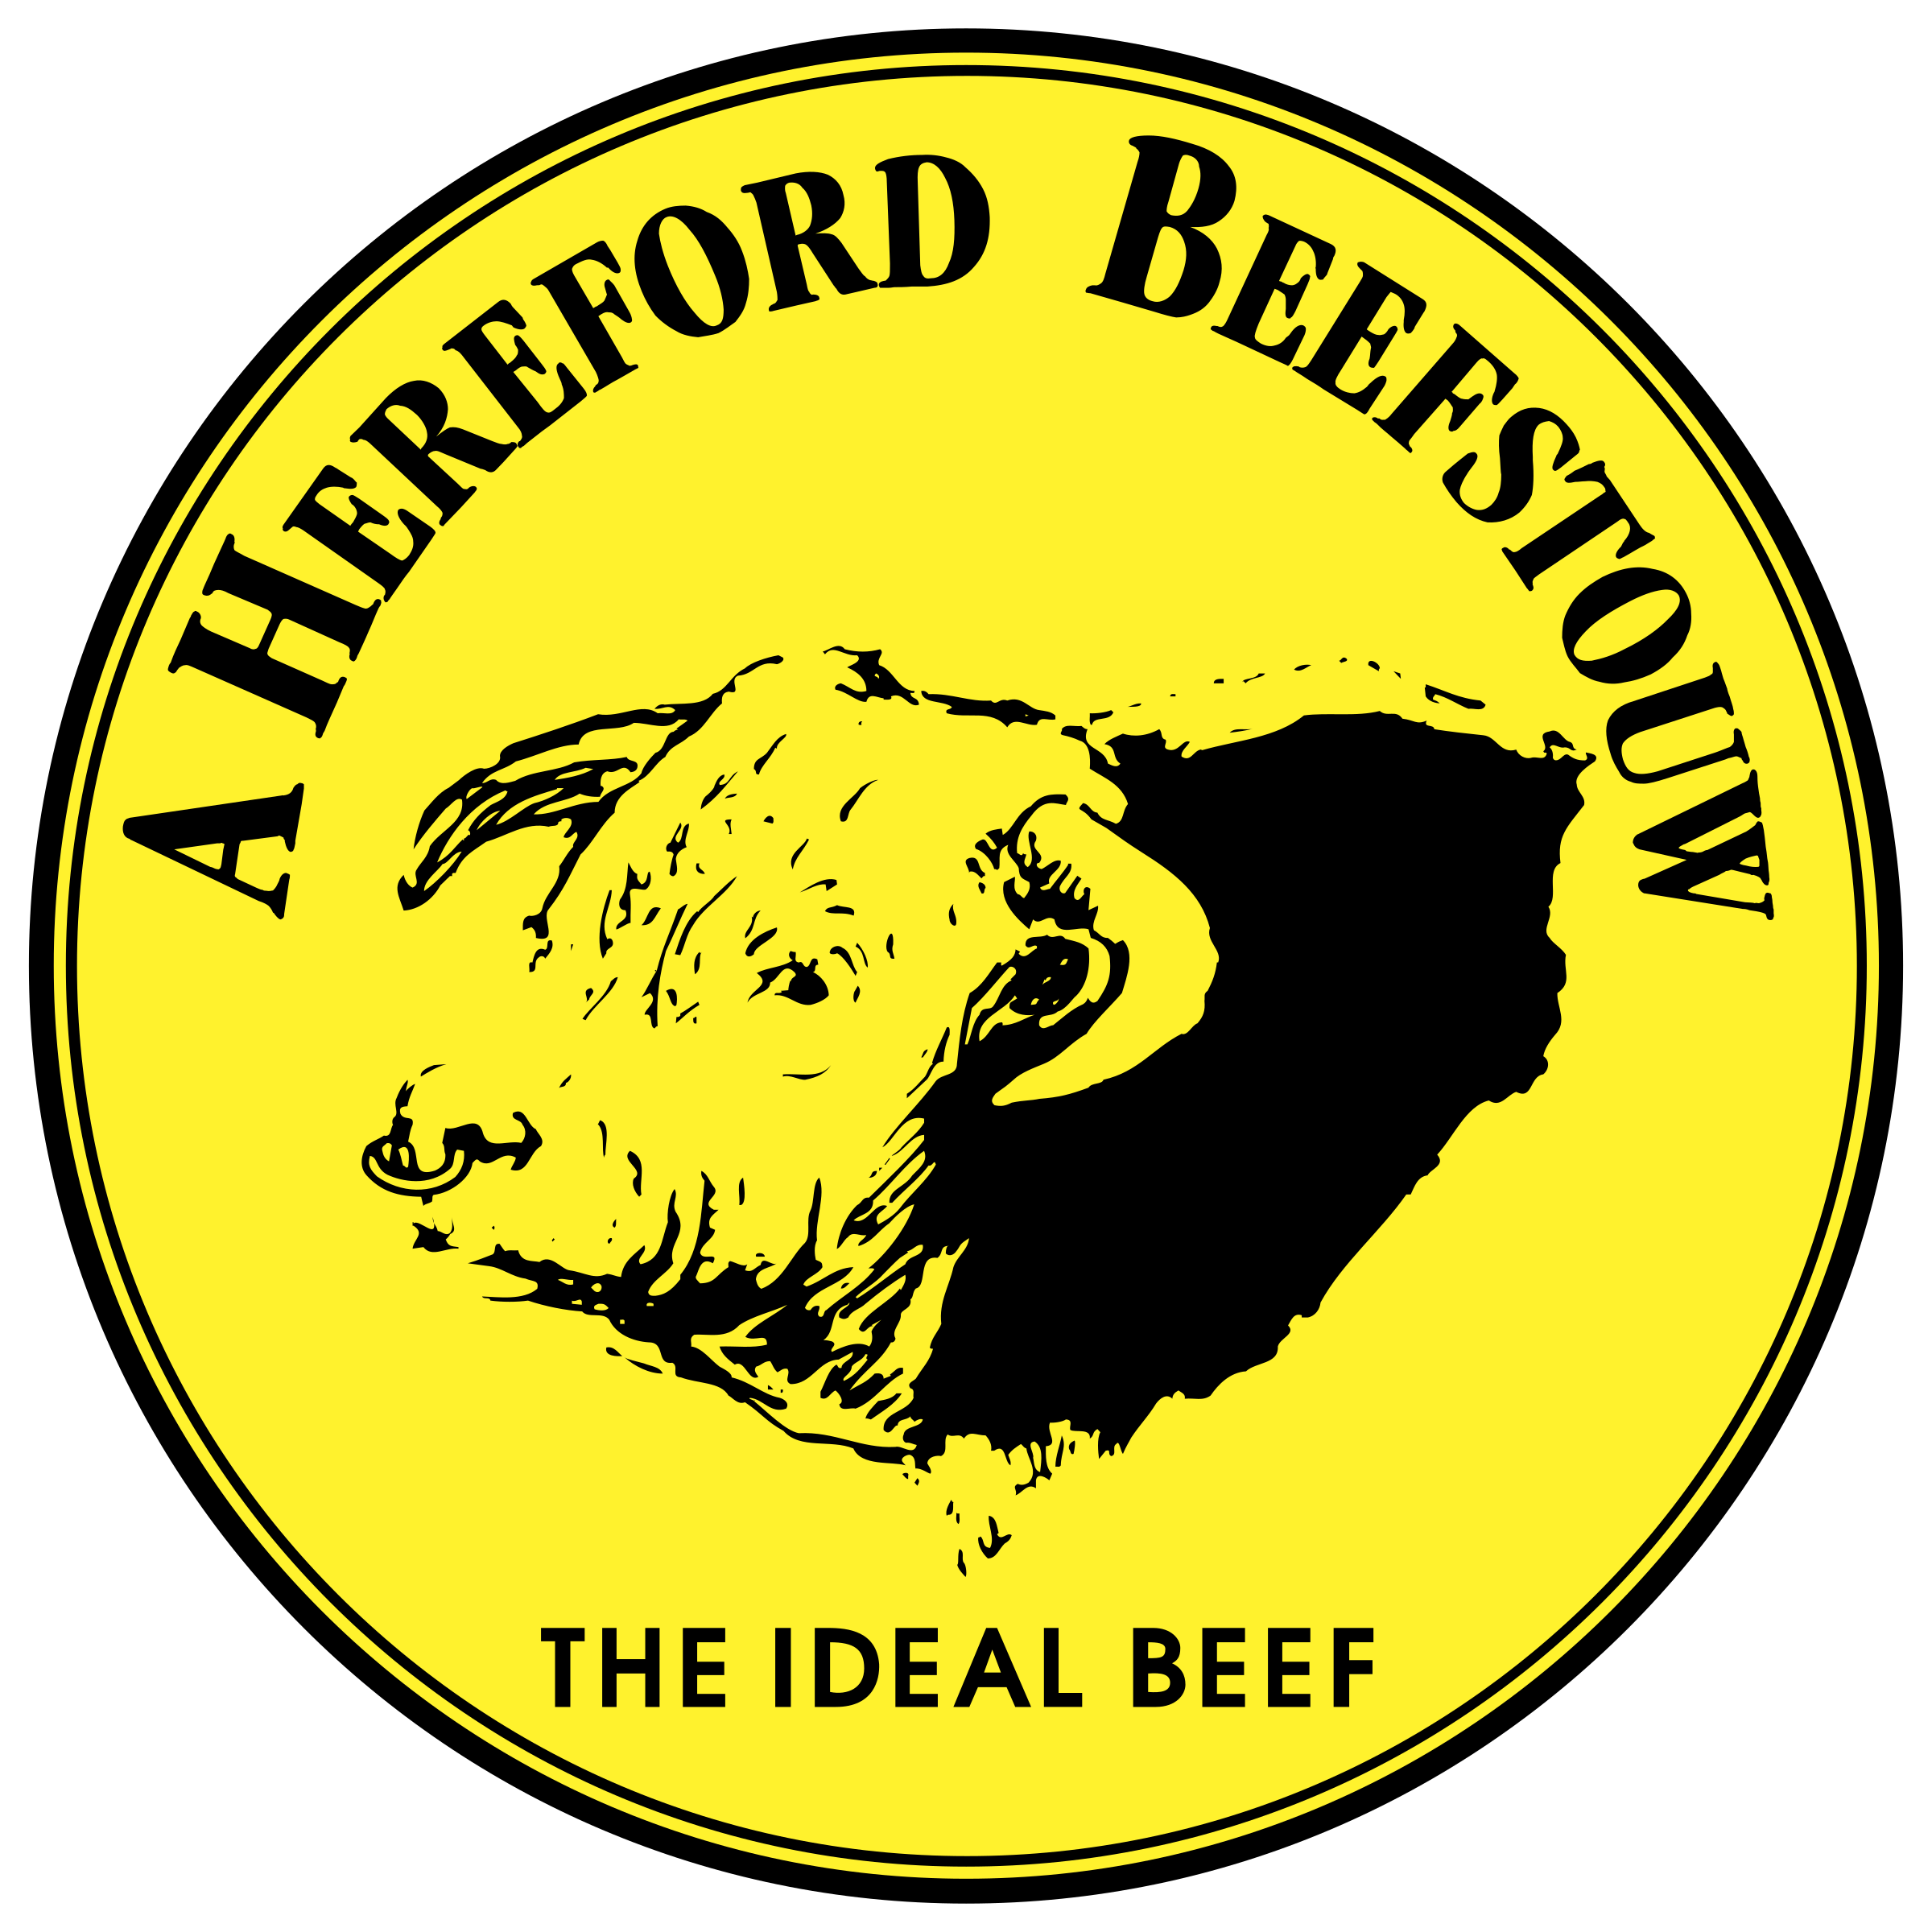 Hereford Logo - Hereford Beefstouw Logo PNG Transparent & SVG Vector - Freebie Supply